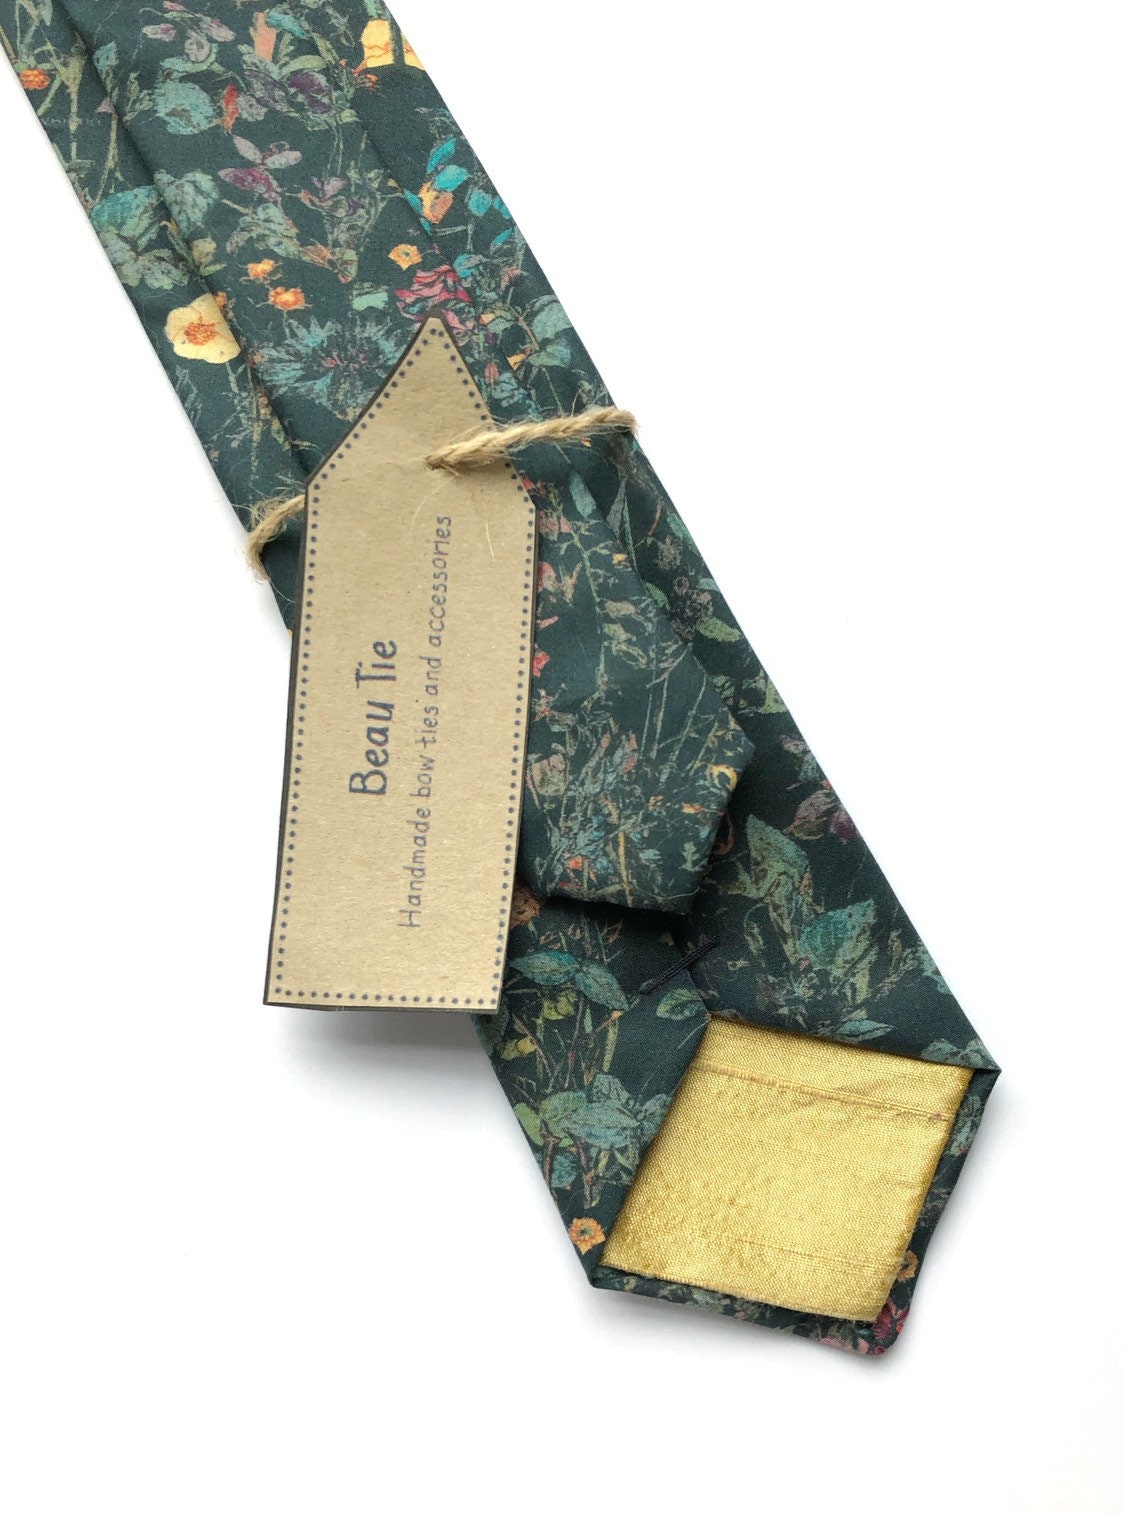 Men's floral tie handmade using dark green wildflower | Etsy